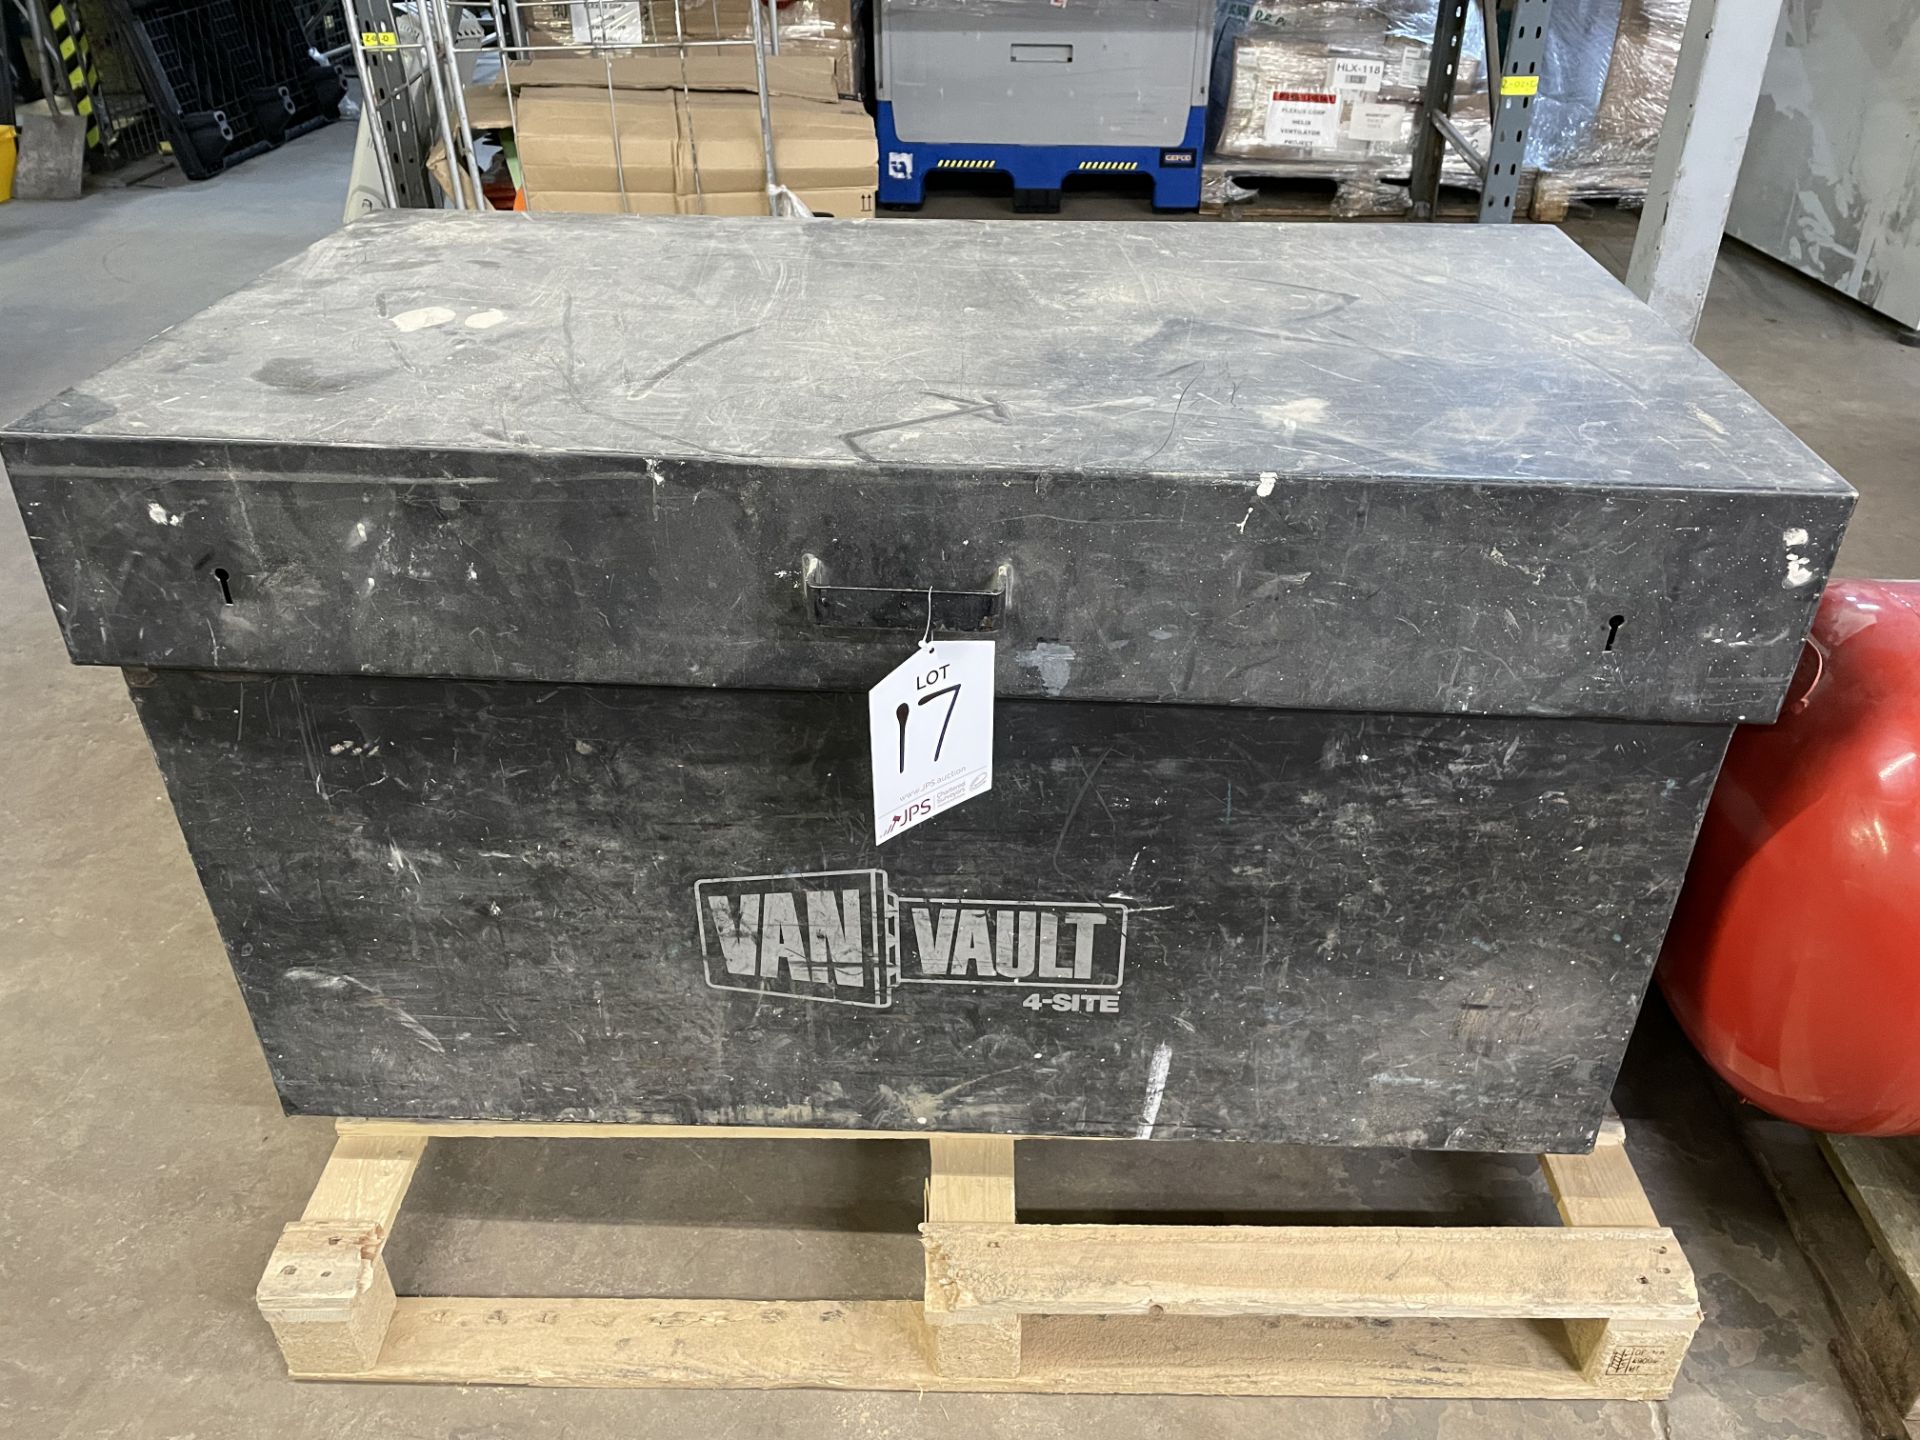 Van Vault 4-SITE Tool Security Storage Box